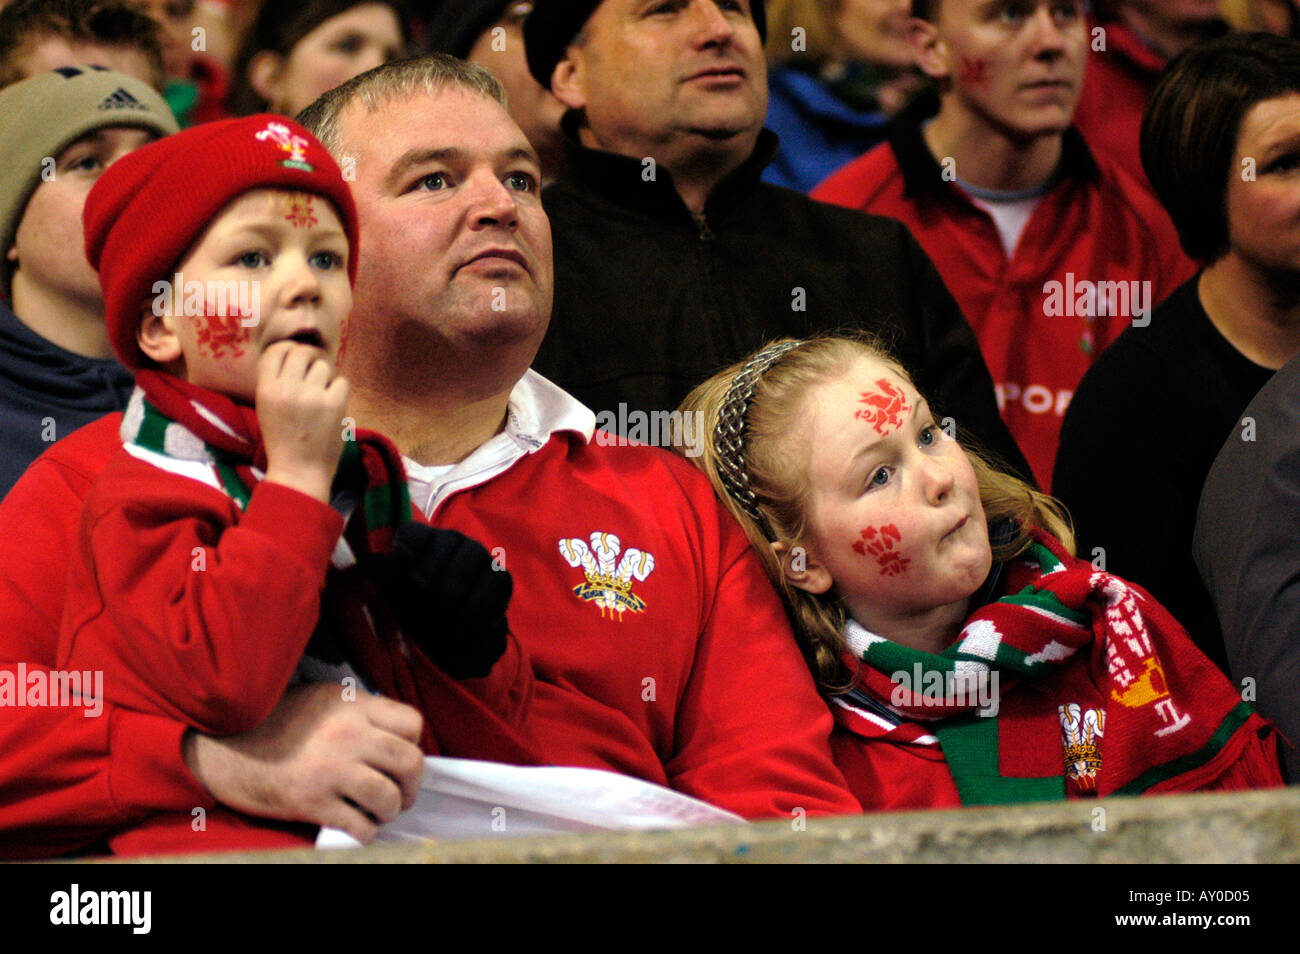 22 2 03 Cardiff Wales V England Wales Fans Mann mit zwei Kindern in Wales Tops dw Stockfoto